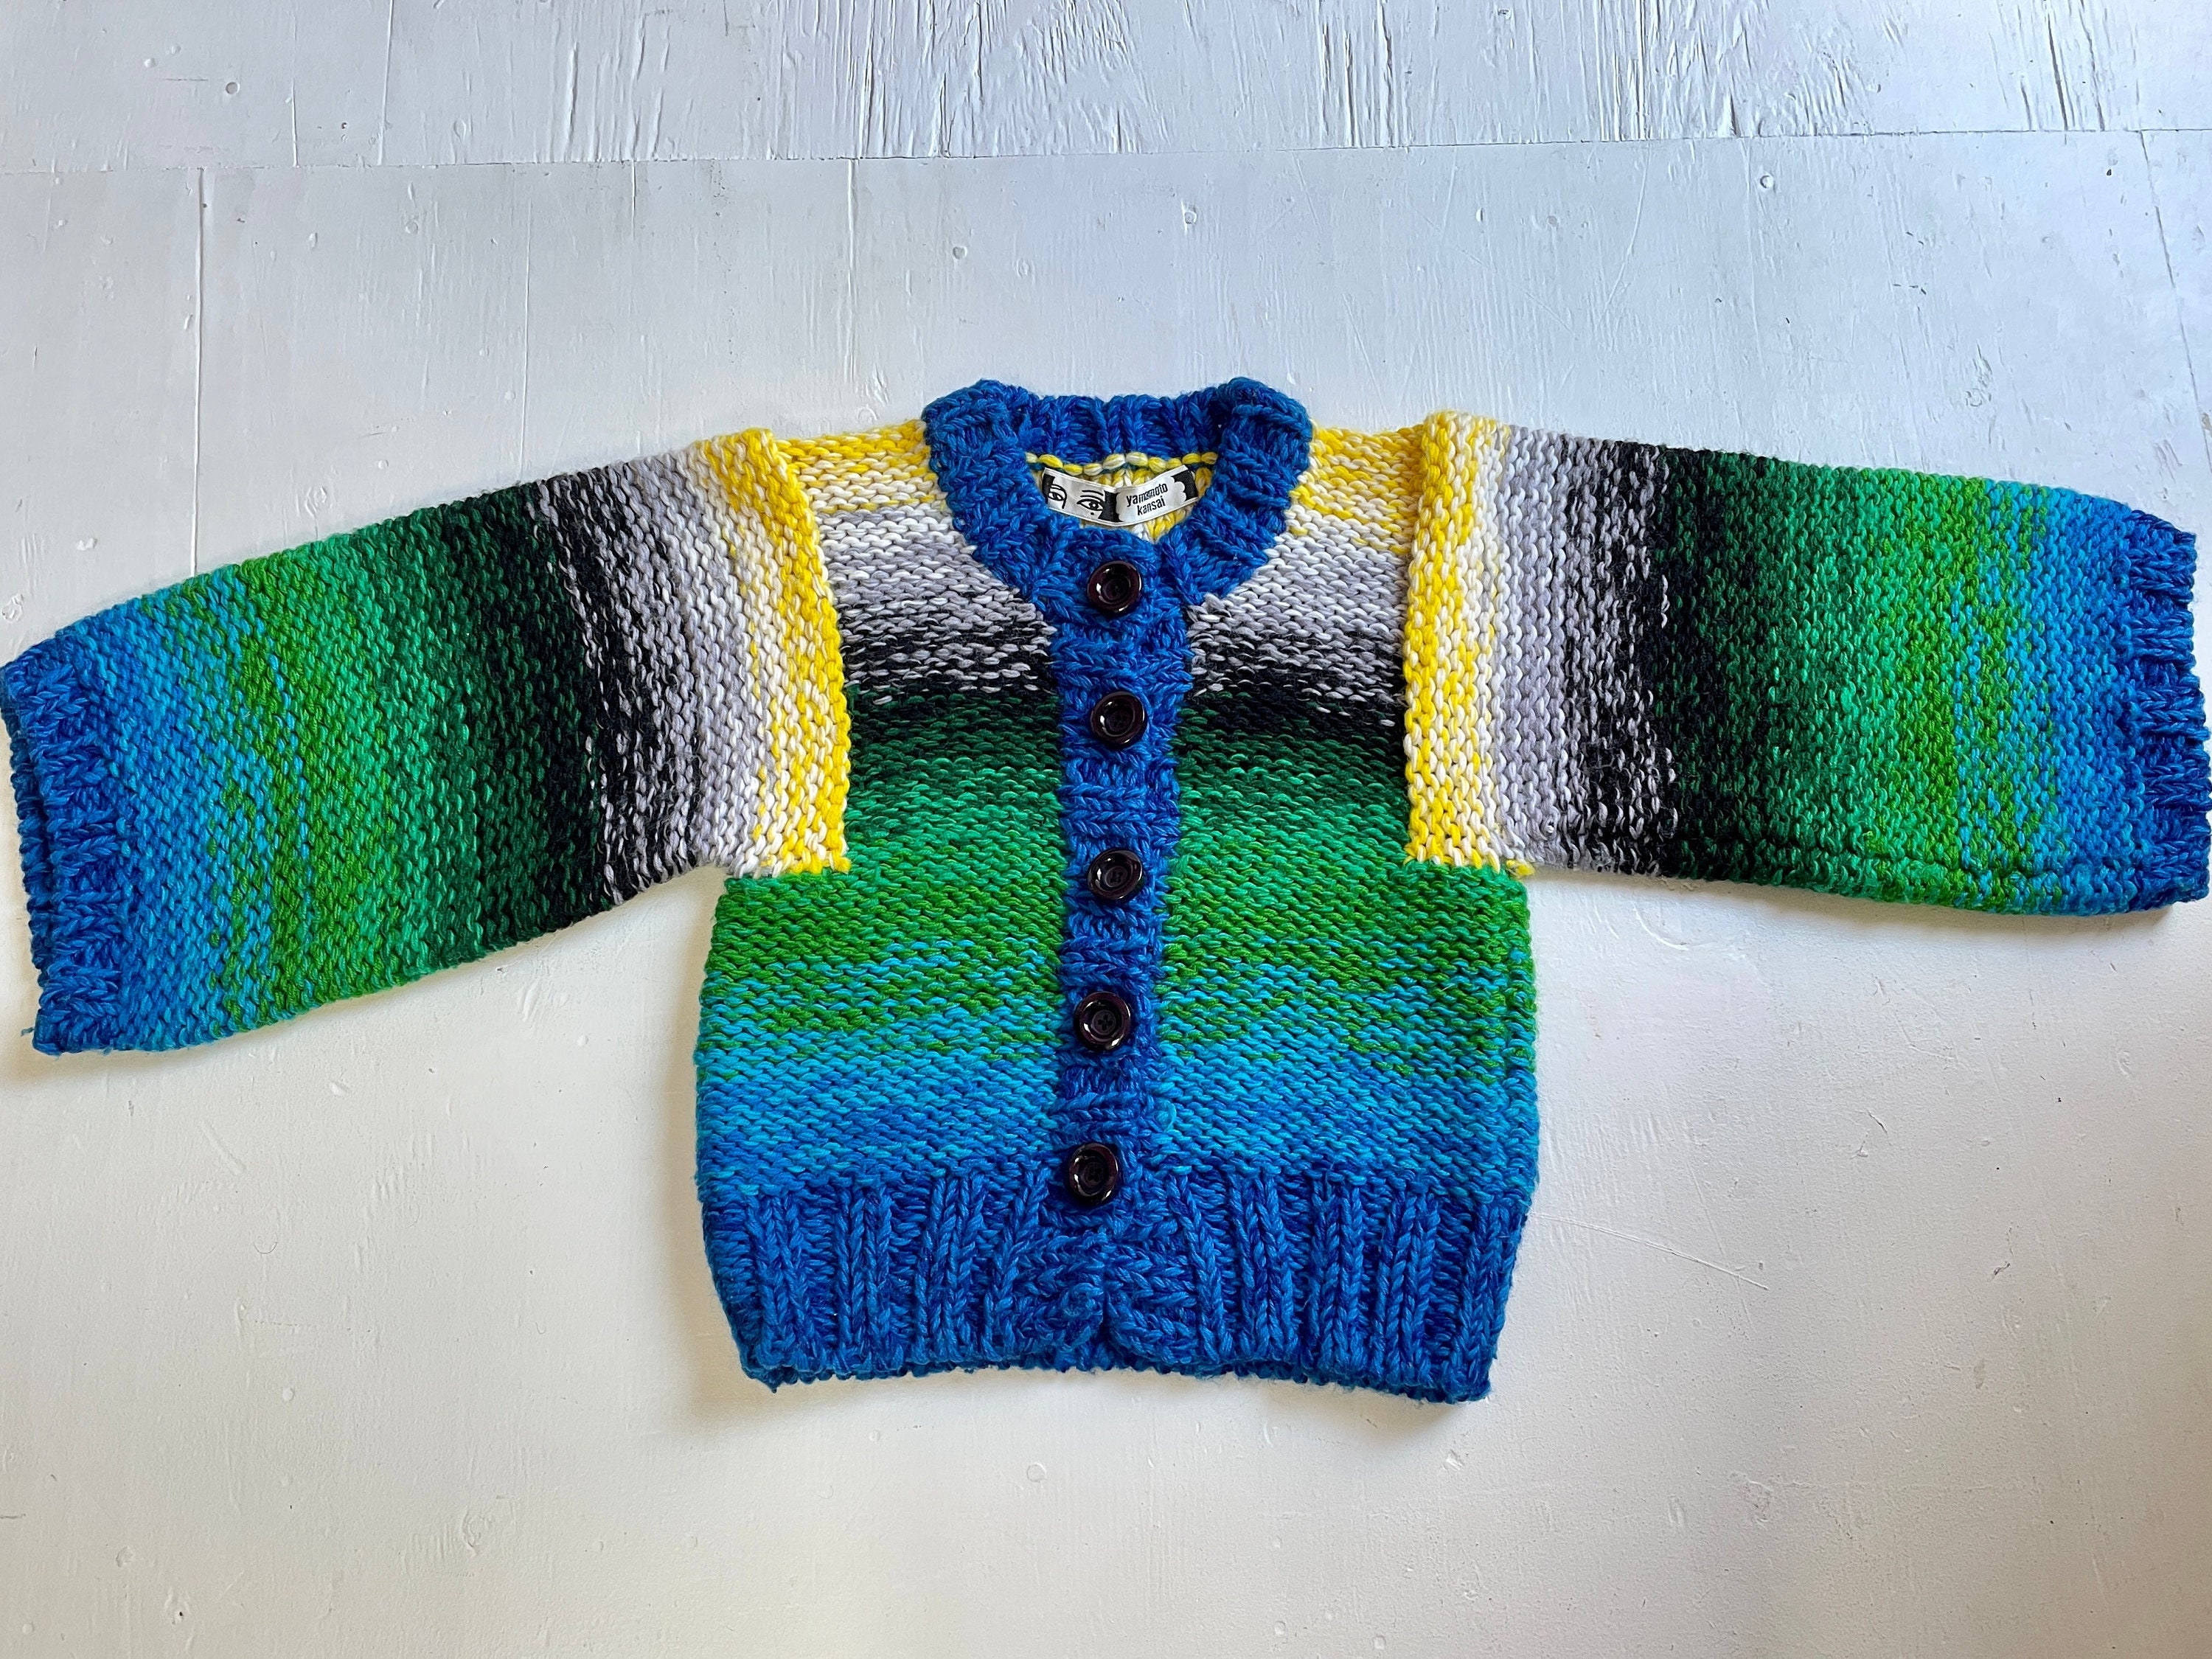 Sweatshirt Kansai Yamamoto Multicolour size 38 FR in Cotton - 22899503